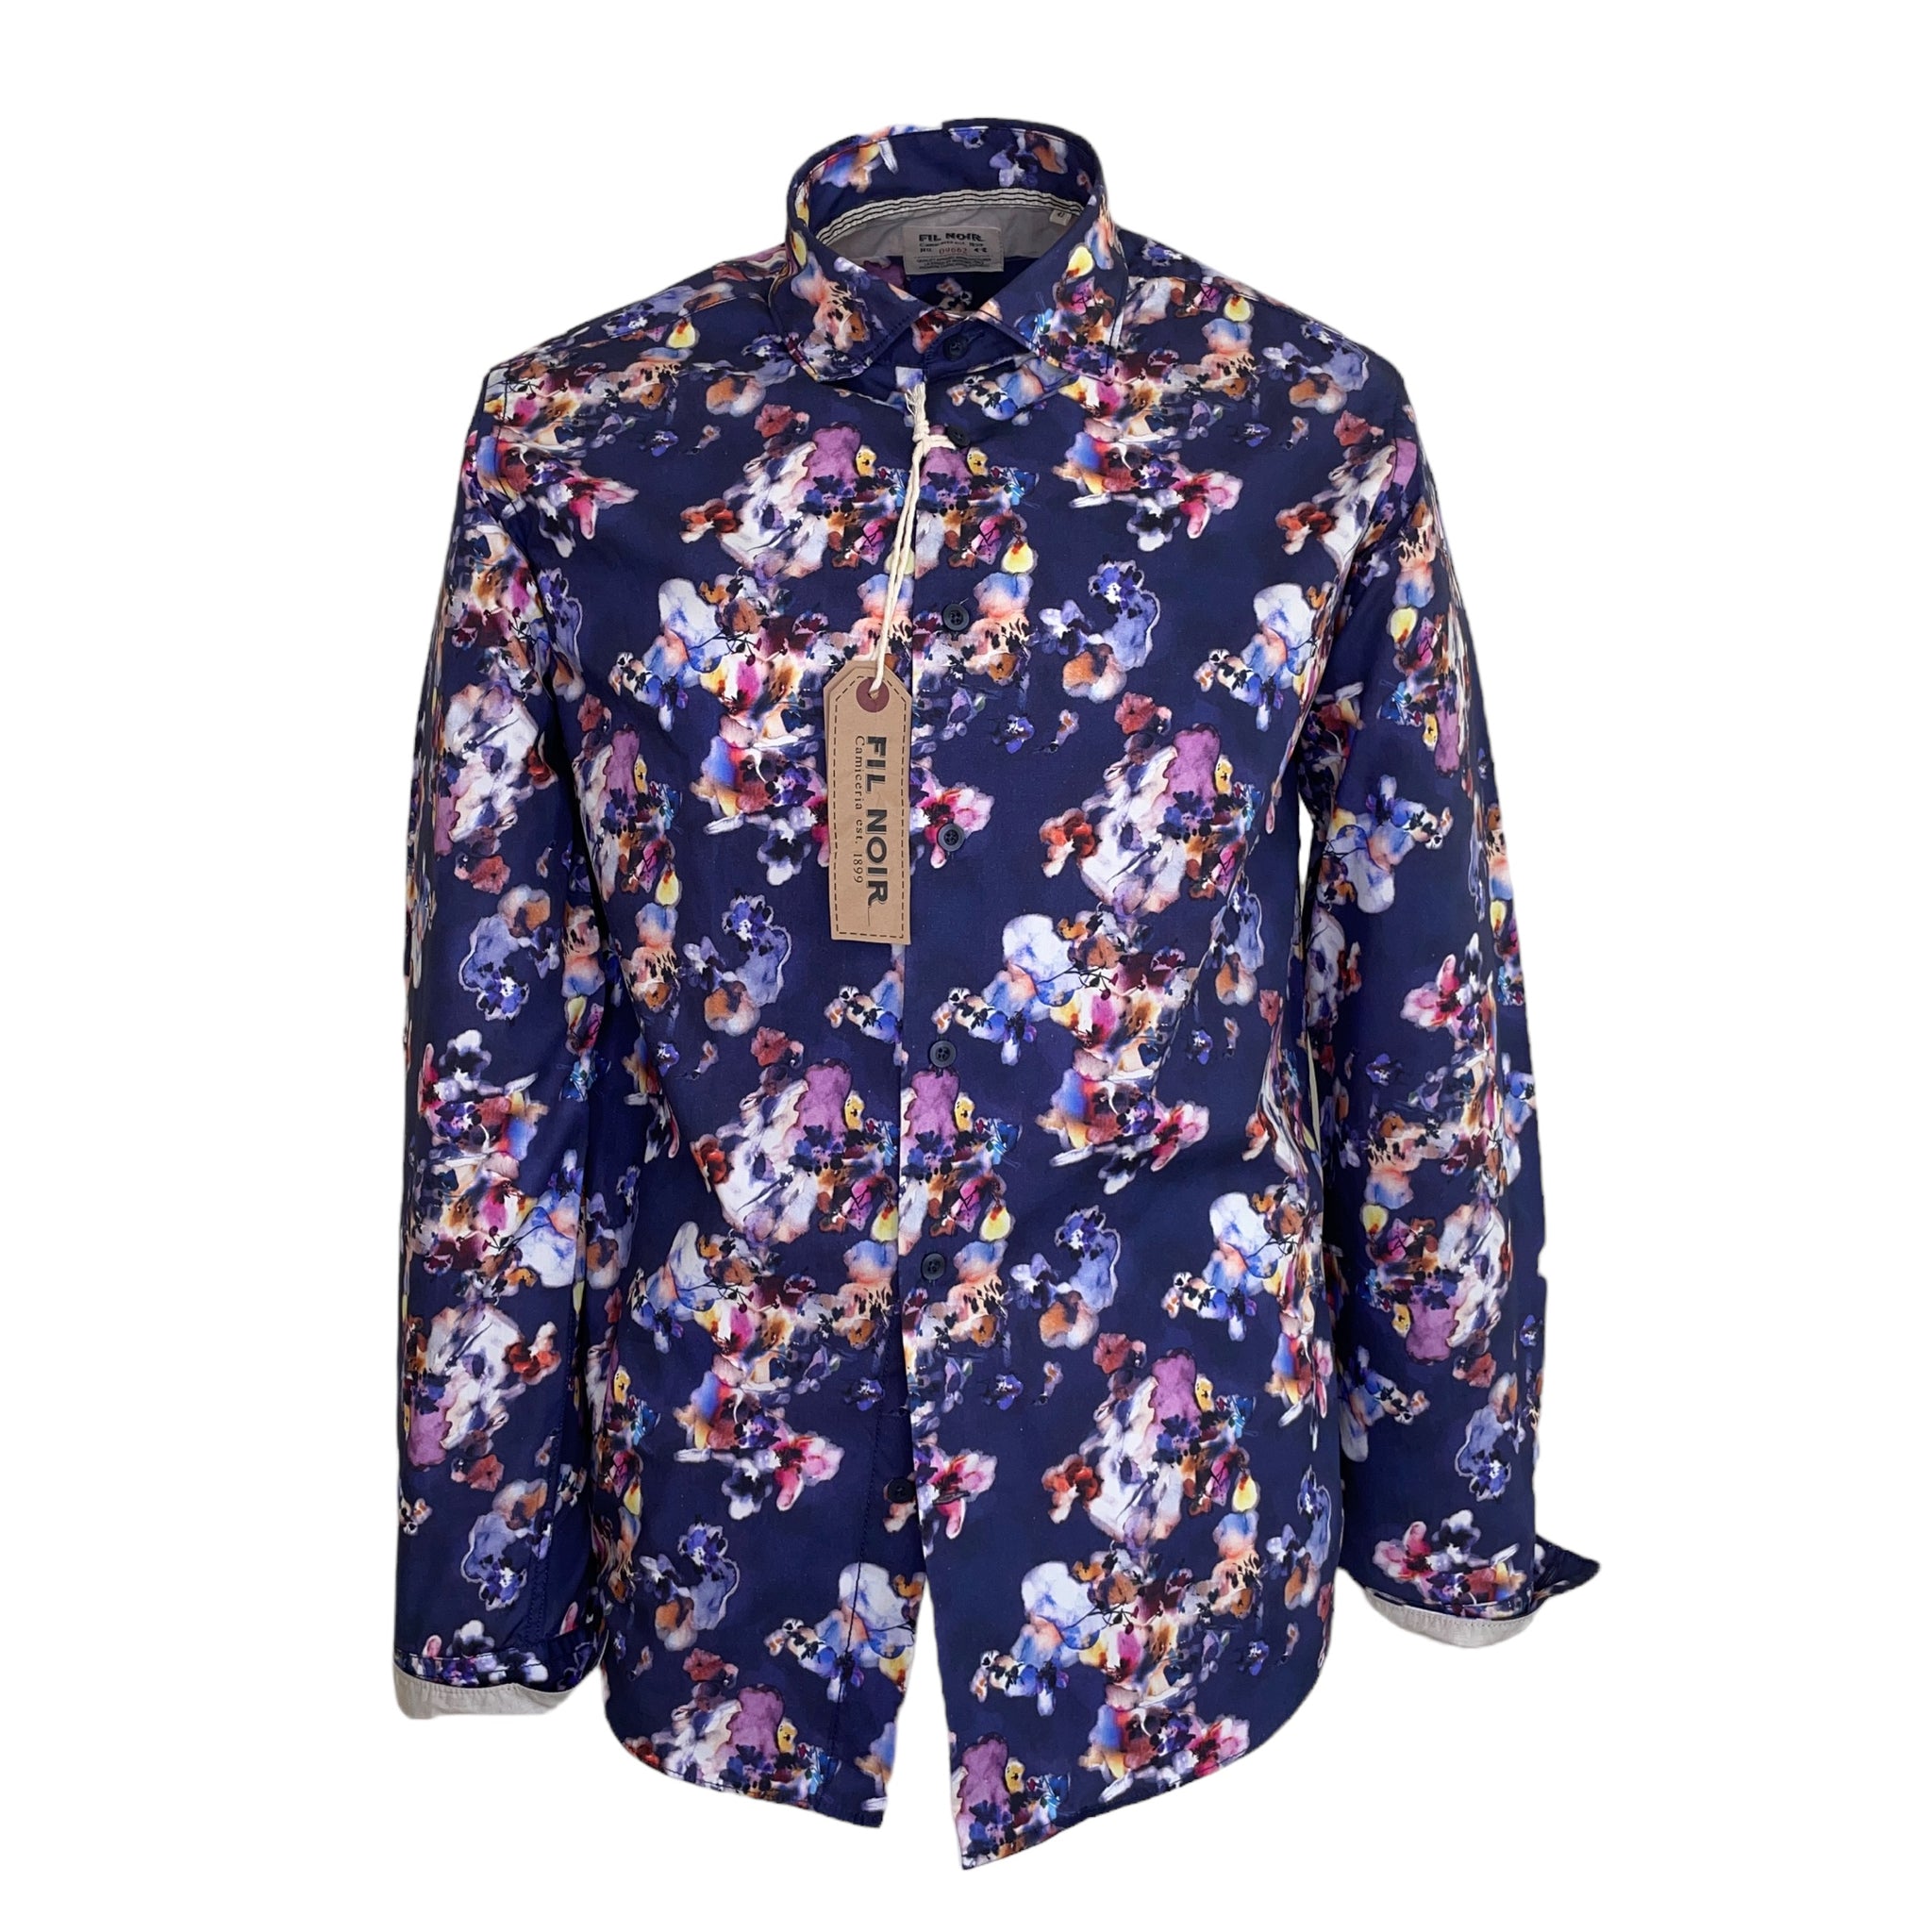 Fil Noir Indigo Floral Print Long Sleeve Shirt (51 806 68)